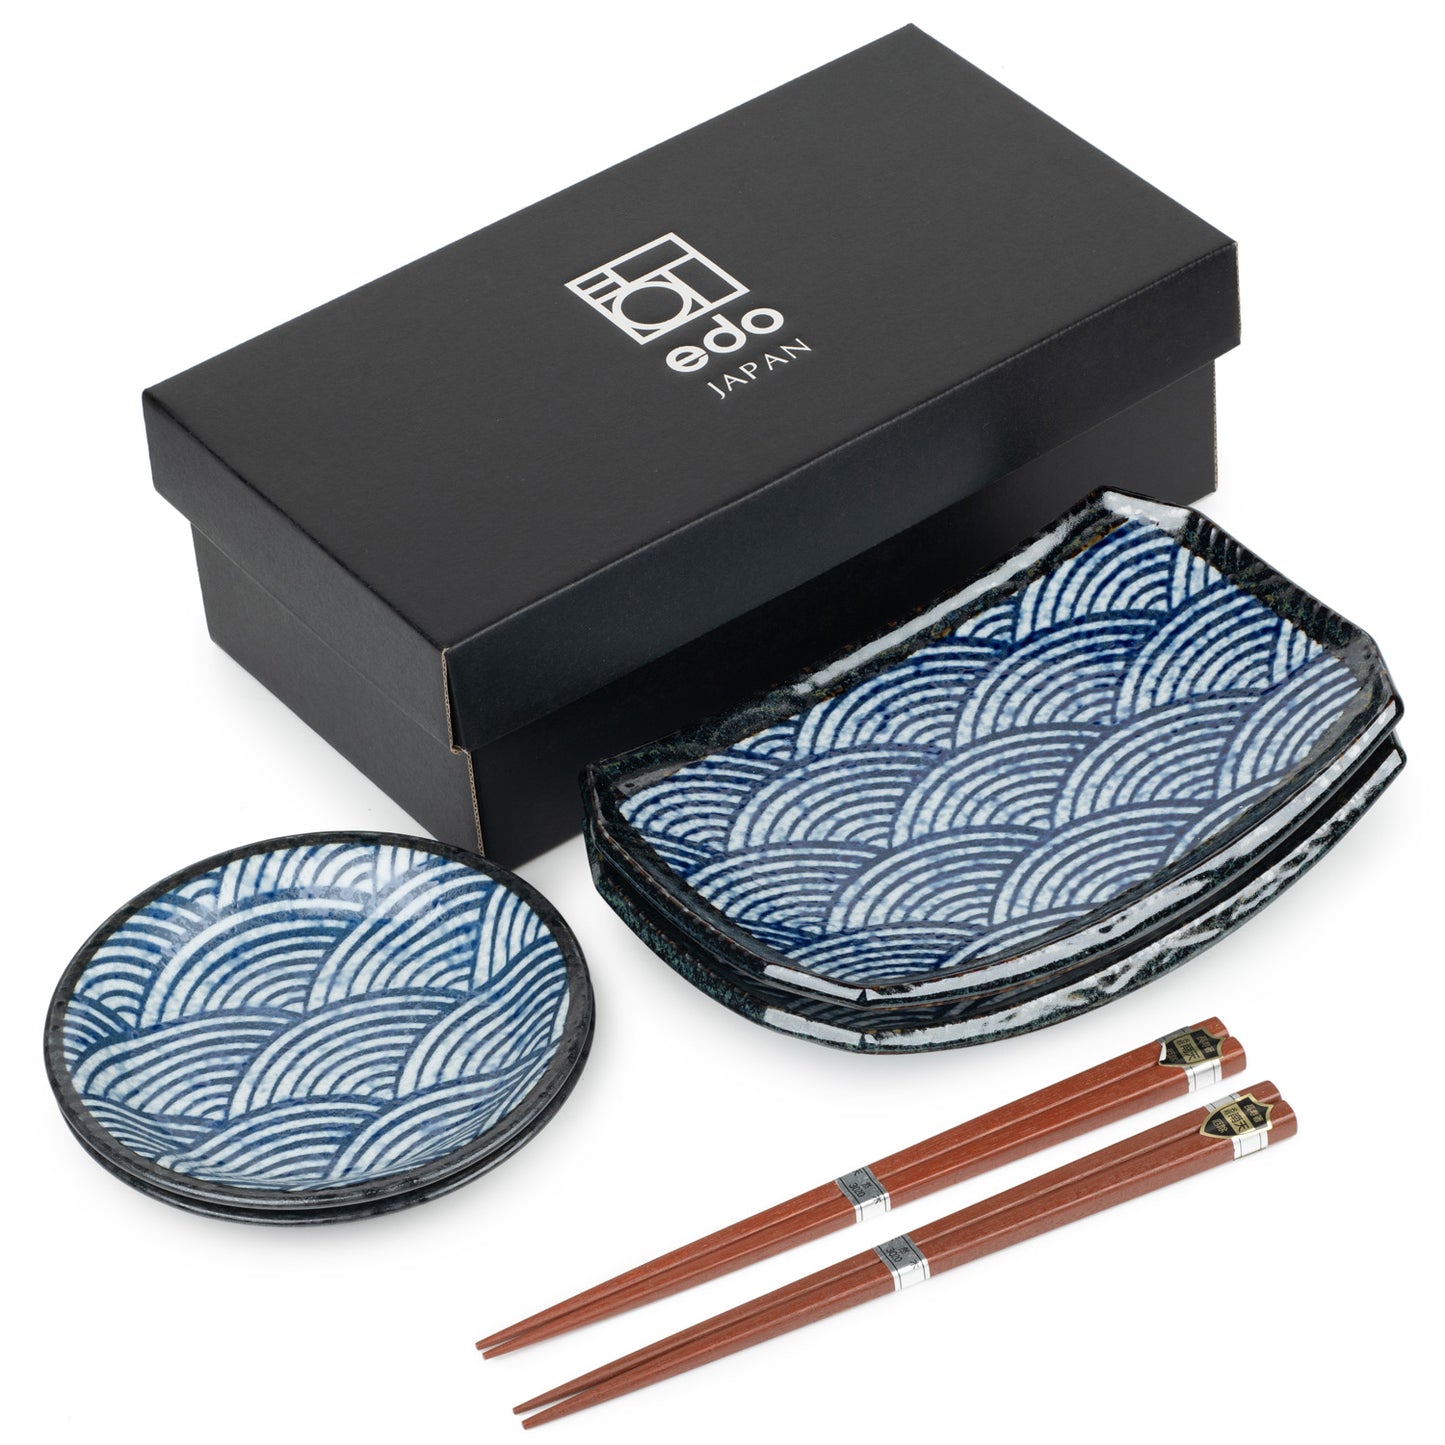 New Seikaha Oblong Japanese Sushi Gift Set and gift box